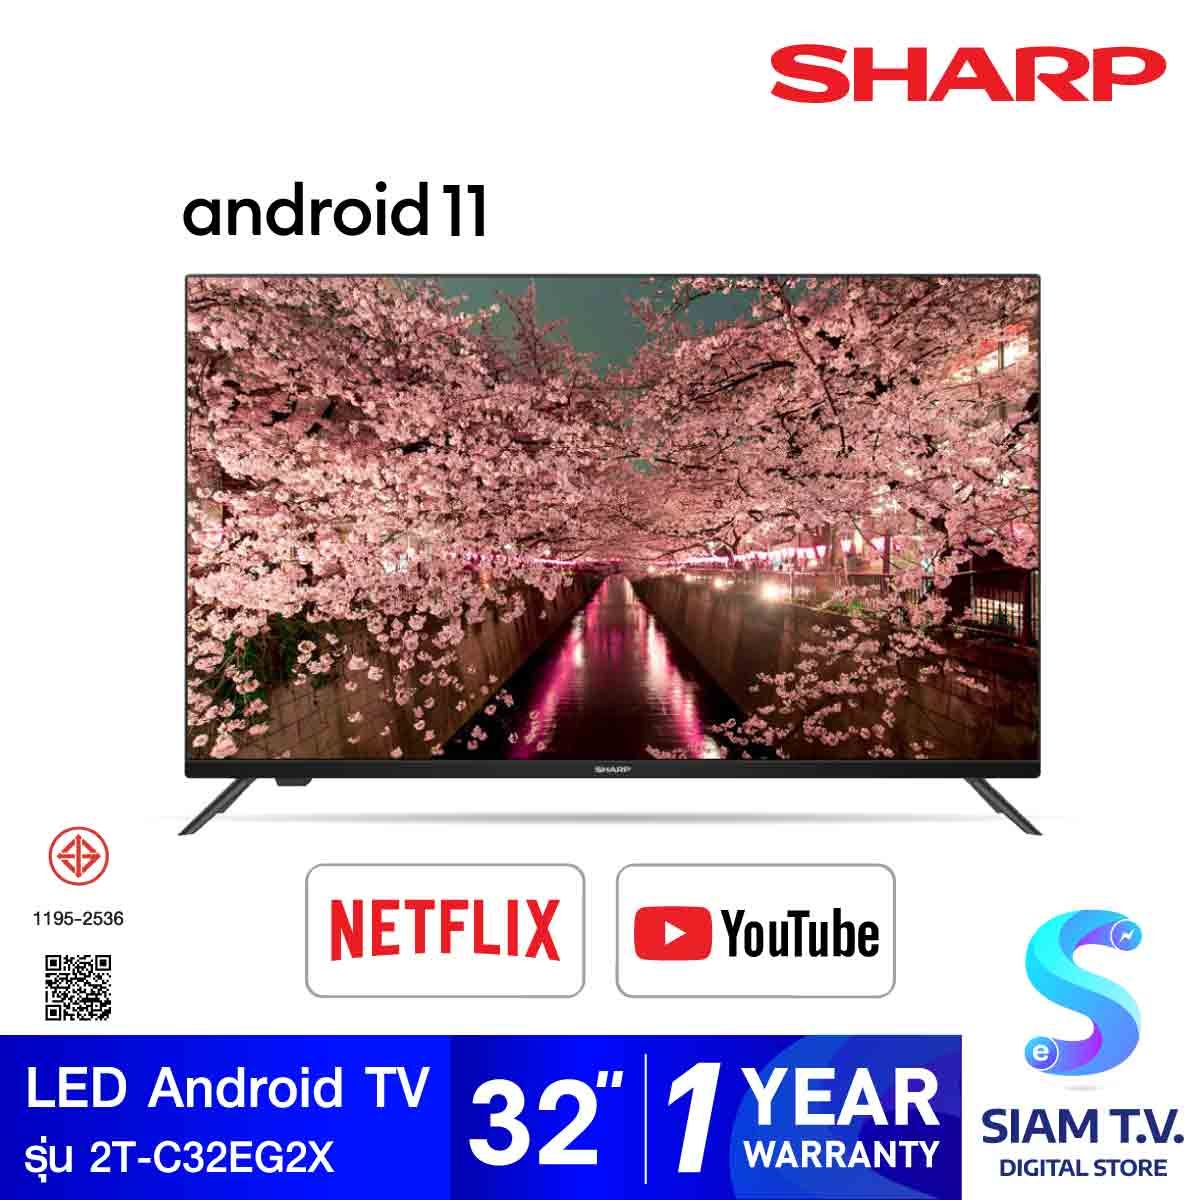 SHARP LED Android TV รุ่น 2T-C32EG2X สมาร์ททีวี 32 นิ้ว Android11